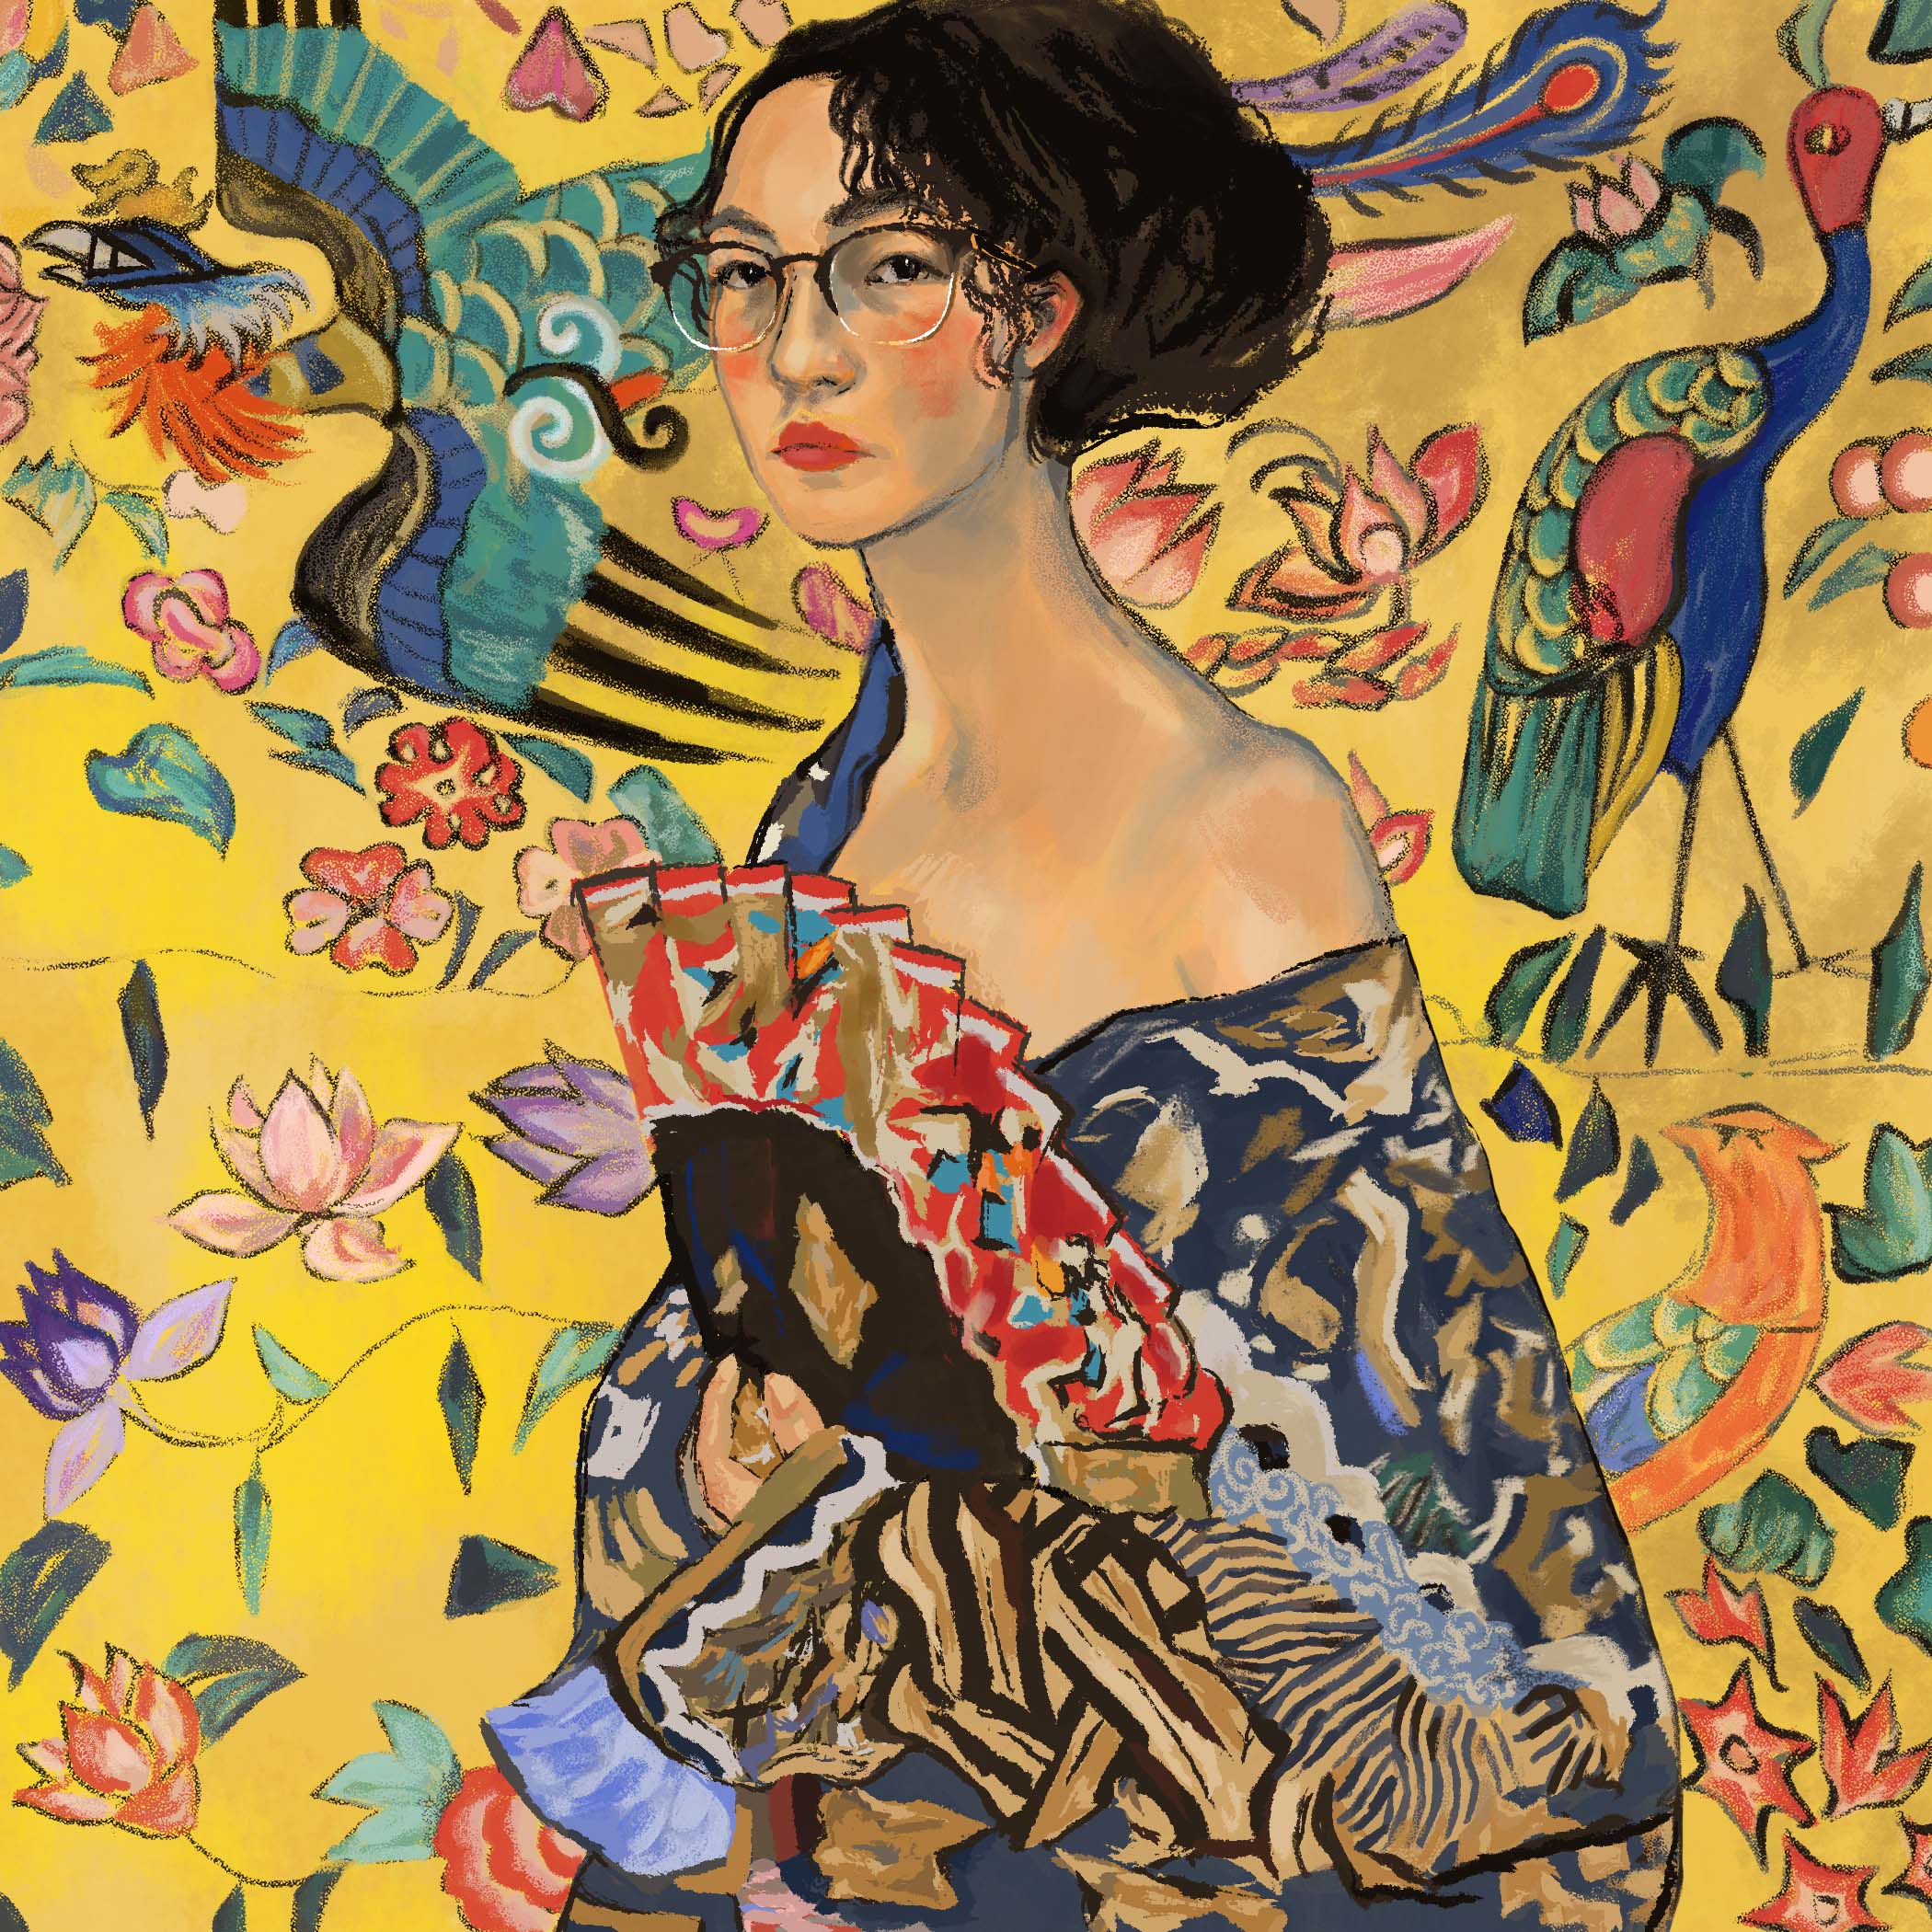 My copy of Lady with a Fan by Gustav Klimt